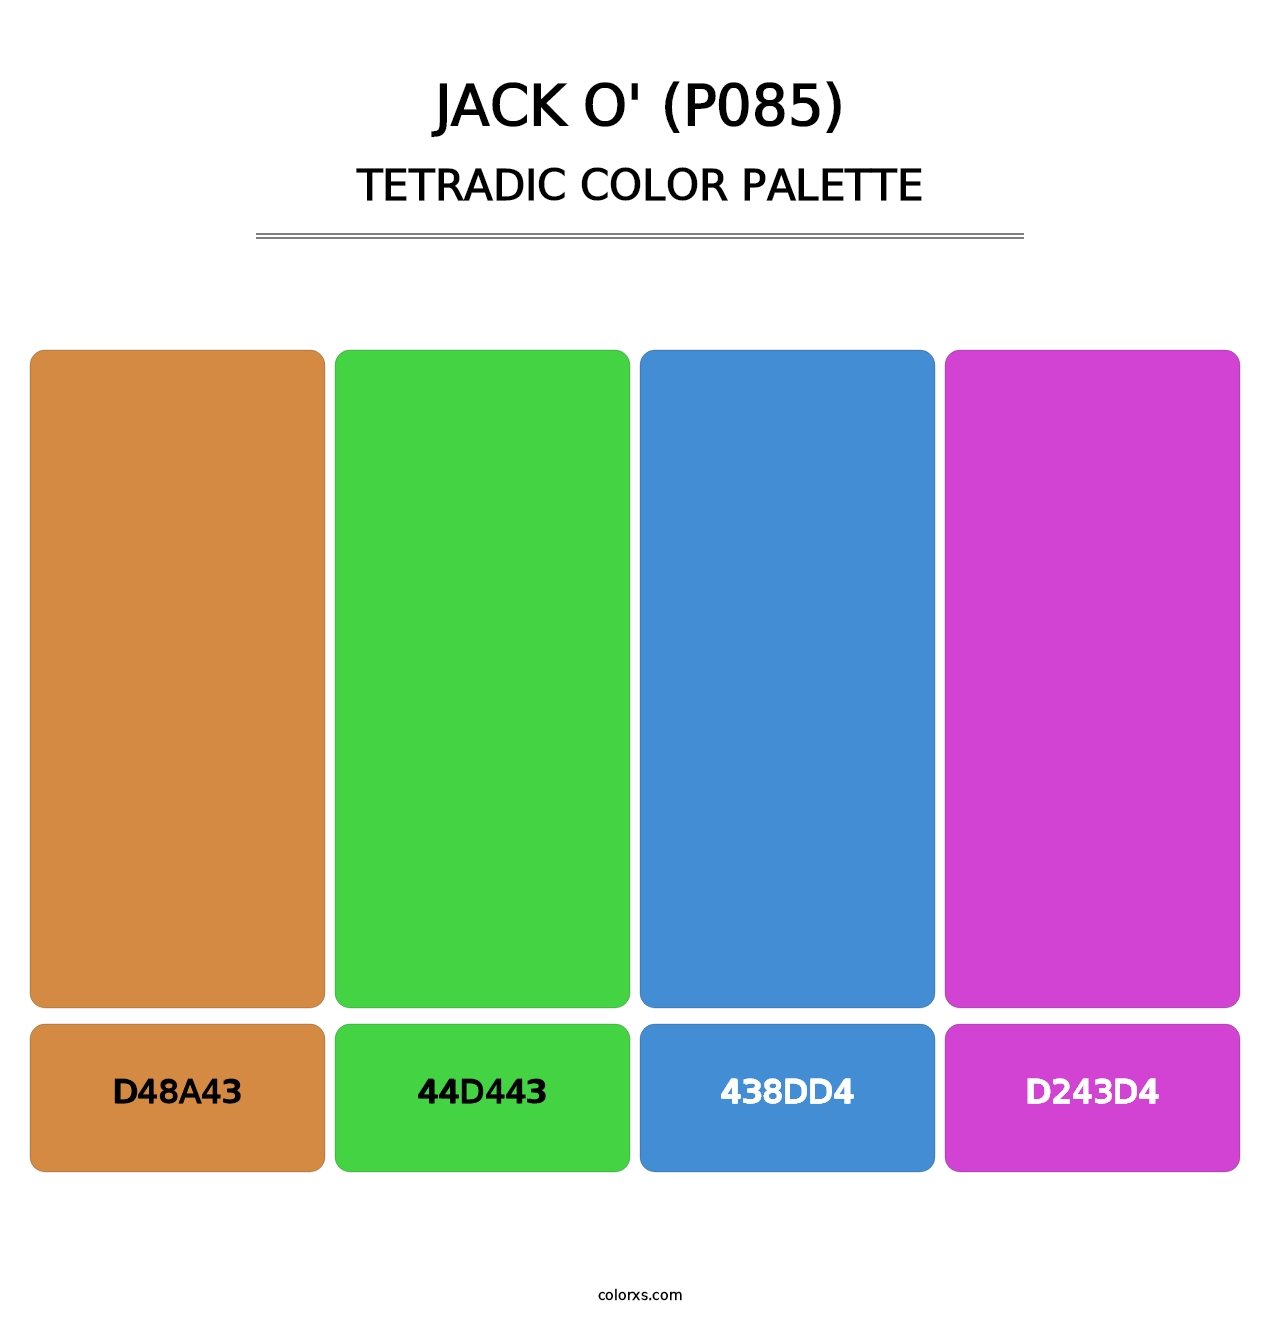 Jack O' (P085) - Tetradic Color Palette